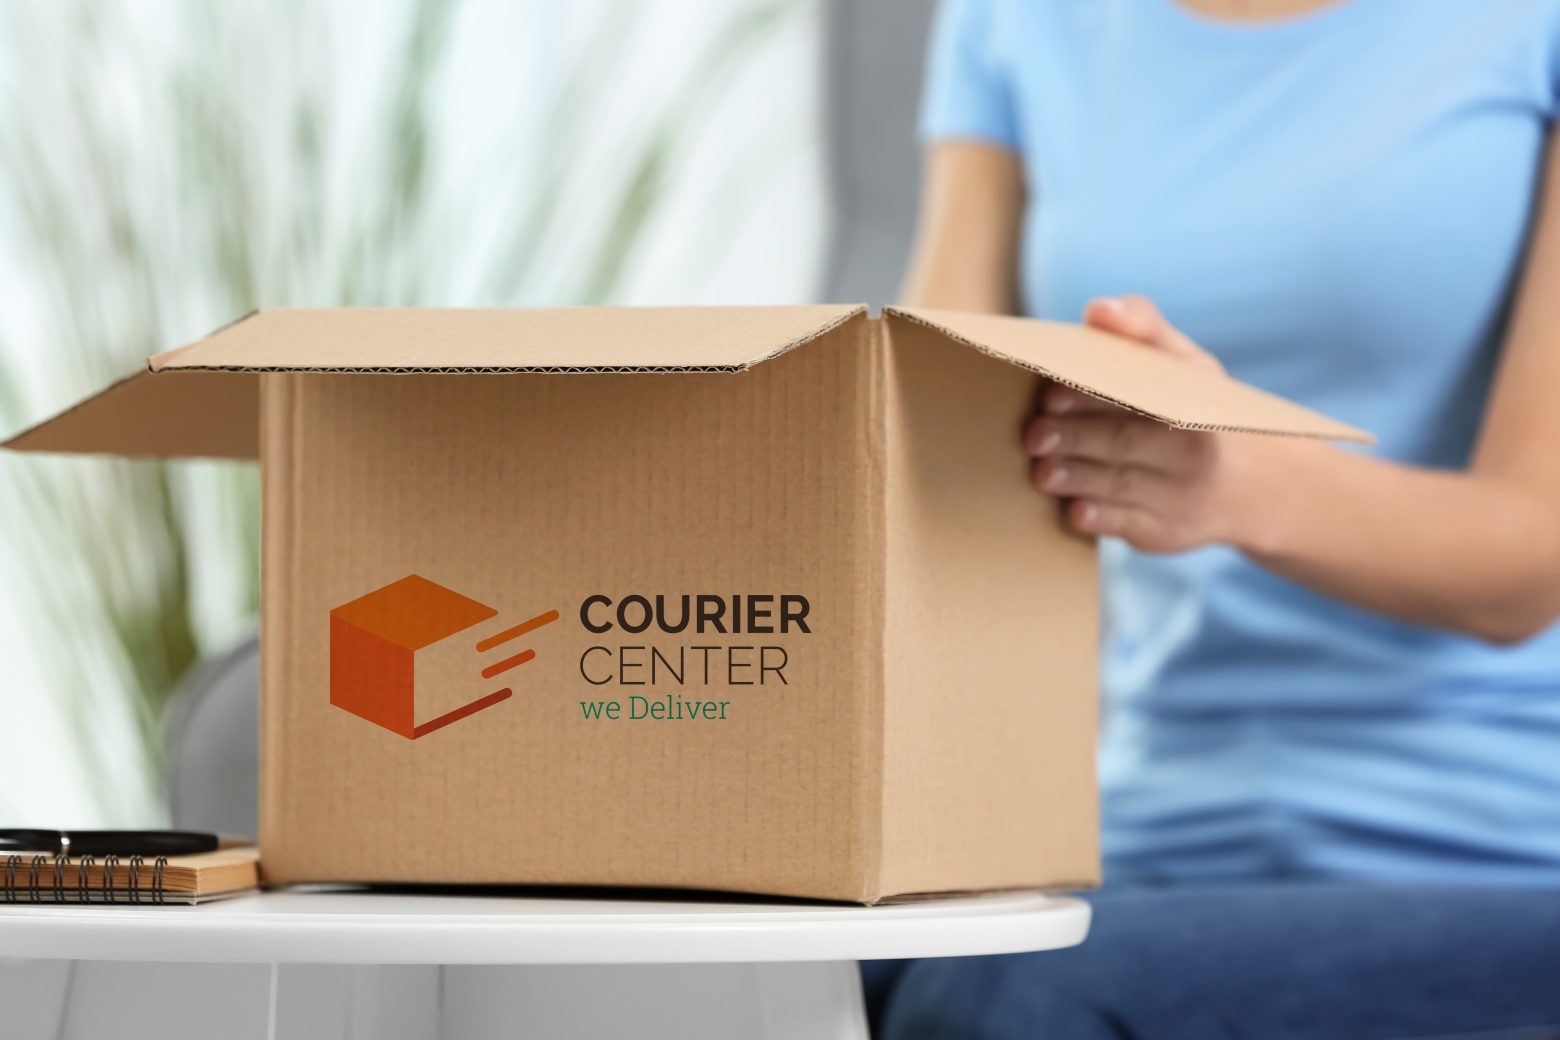 Courier Center: Πανελλαδικό δίκτυο και «άριστα» στην ικανοποίηση πελατών!